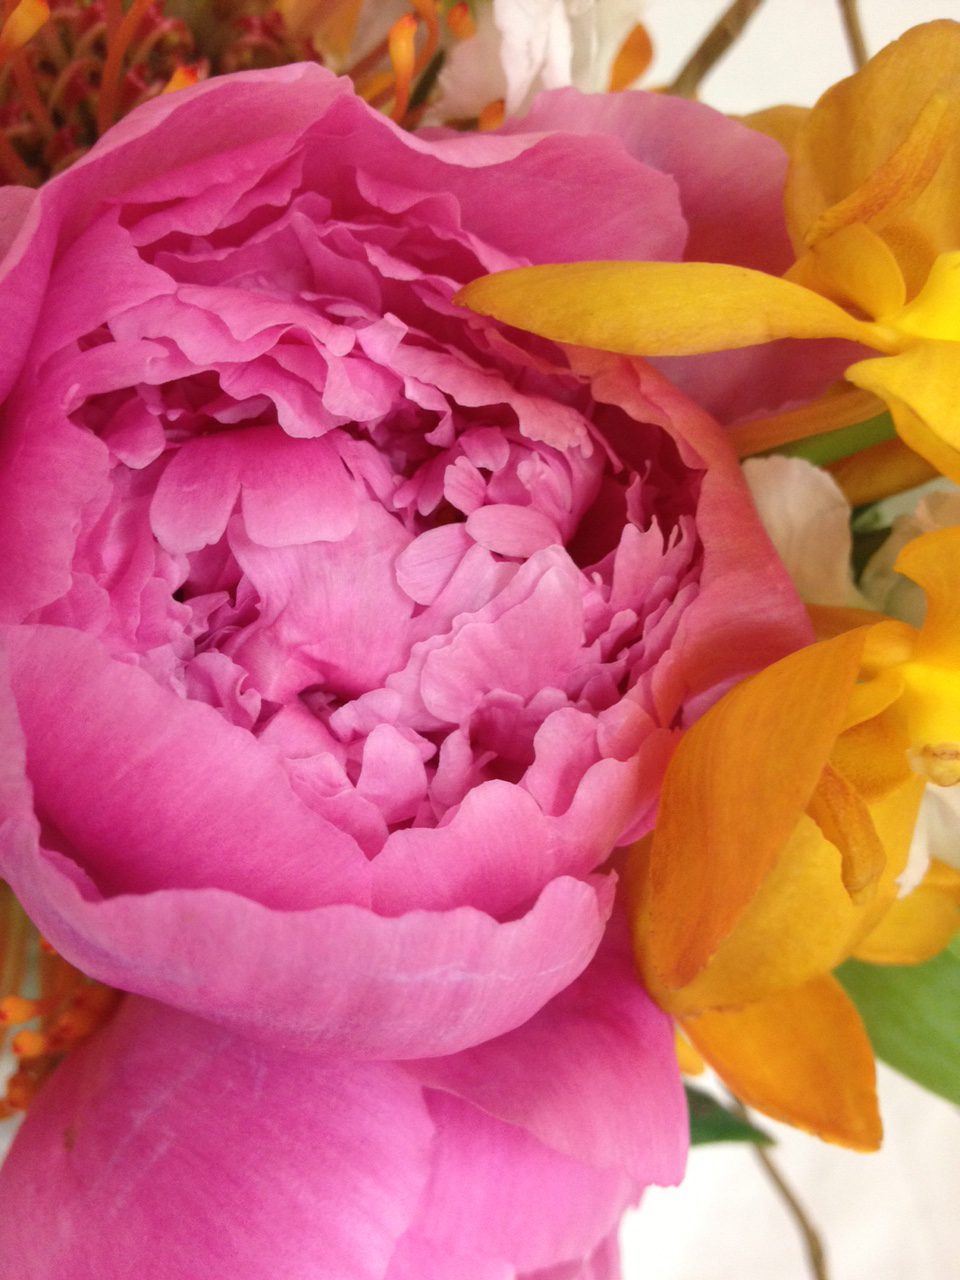 10 ways to love Peonies - Freyta'gs Florist